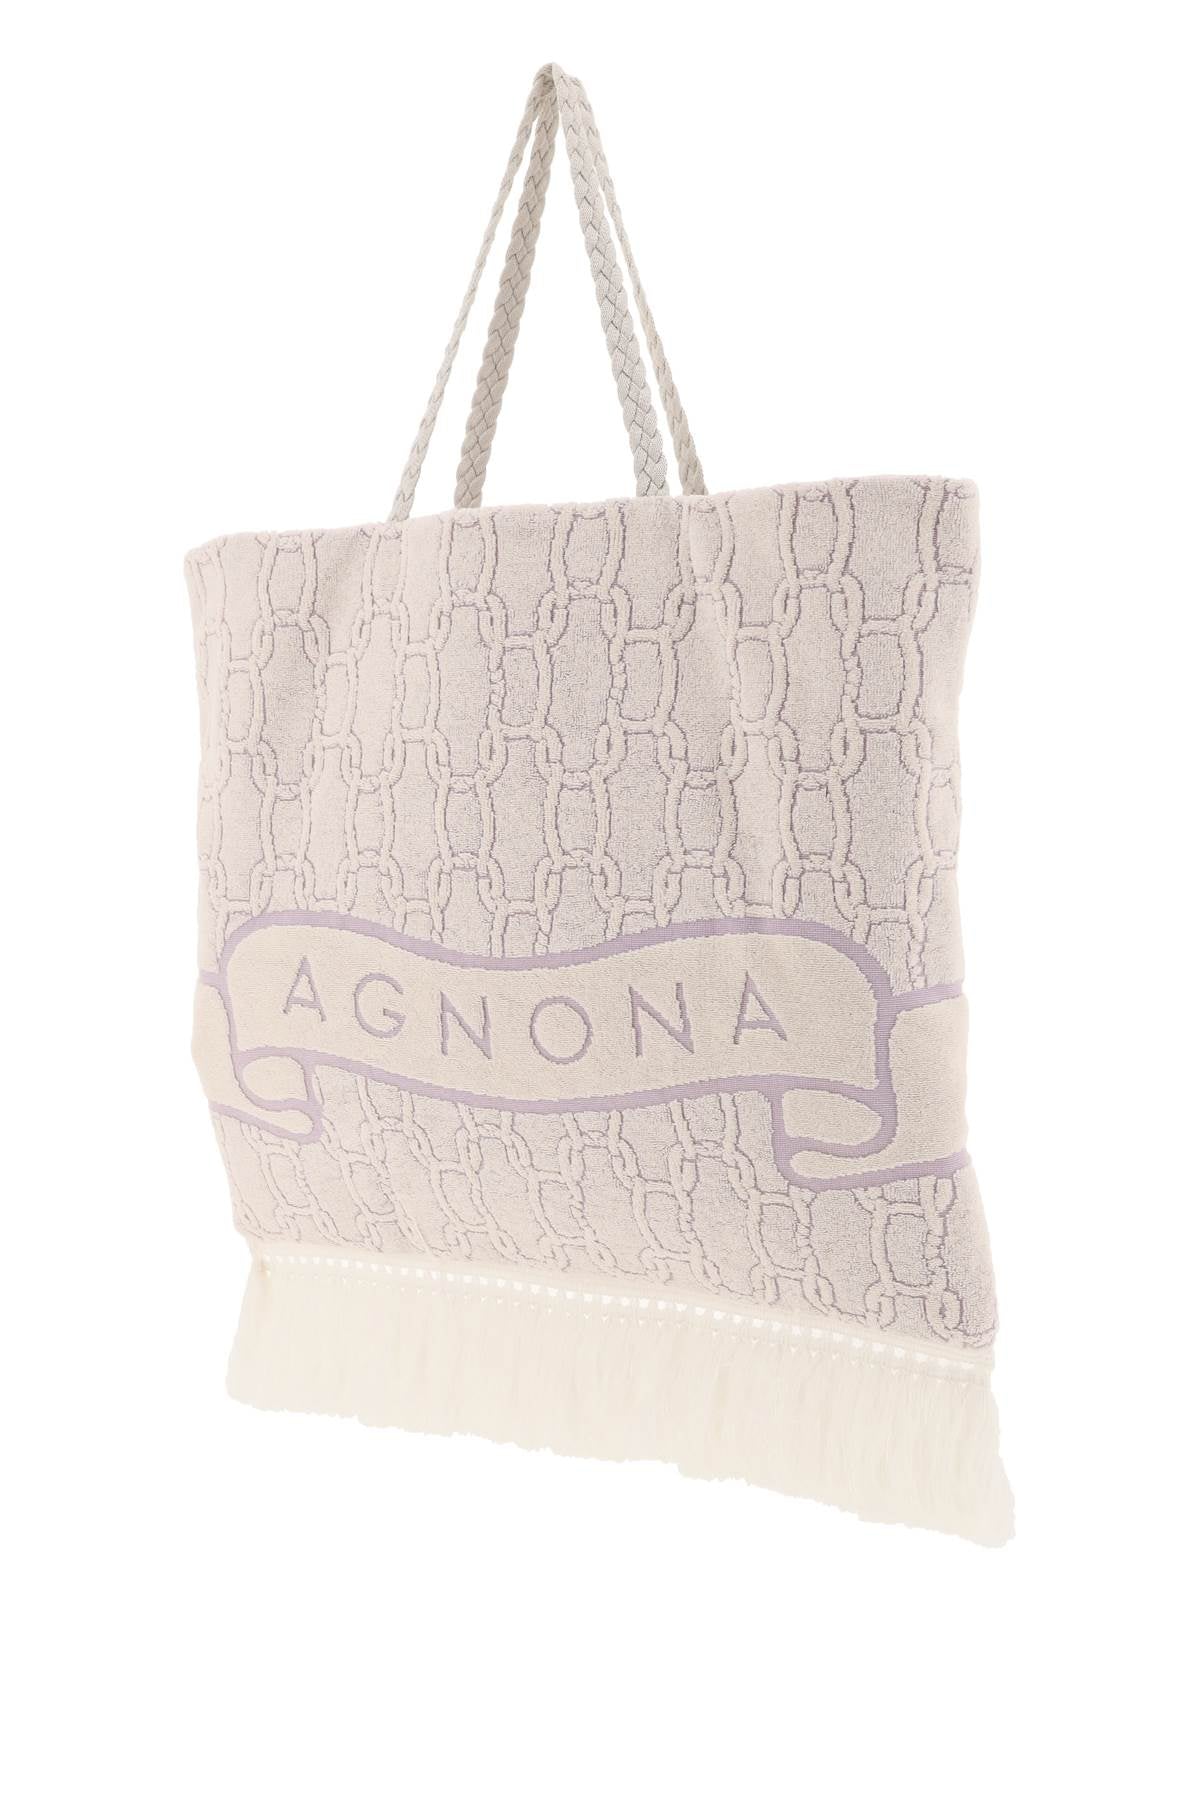 Agnona Agnona cotton tote bag